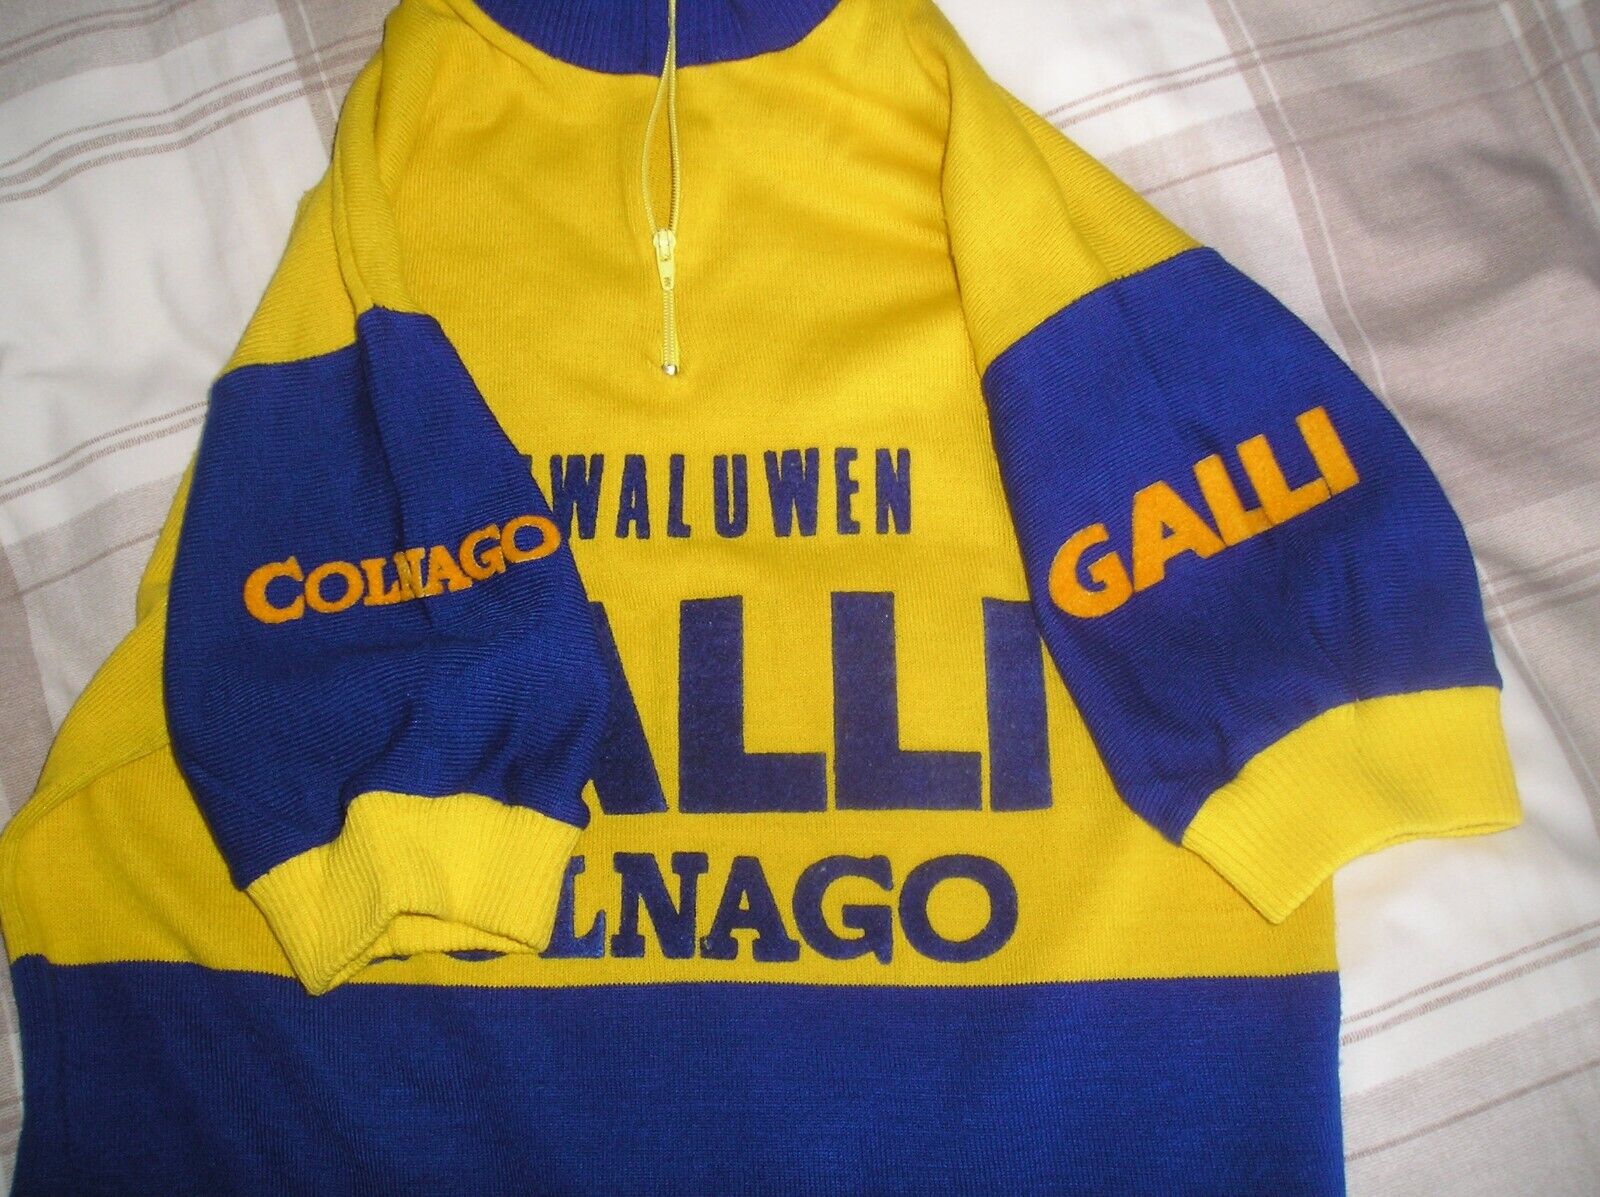 Galli Colnago De Zwaluwen Jersey maglia eroica 4.jpg